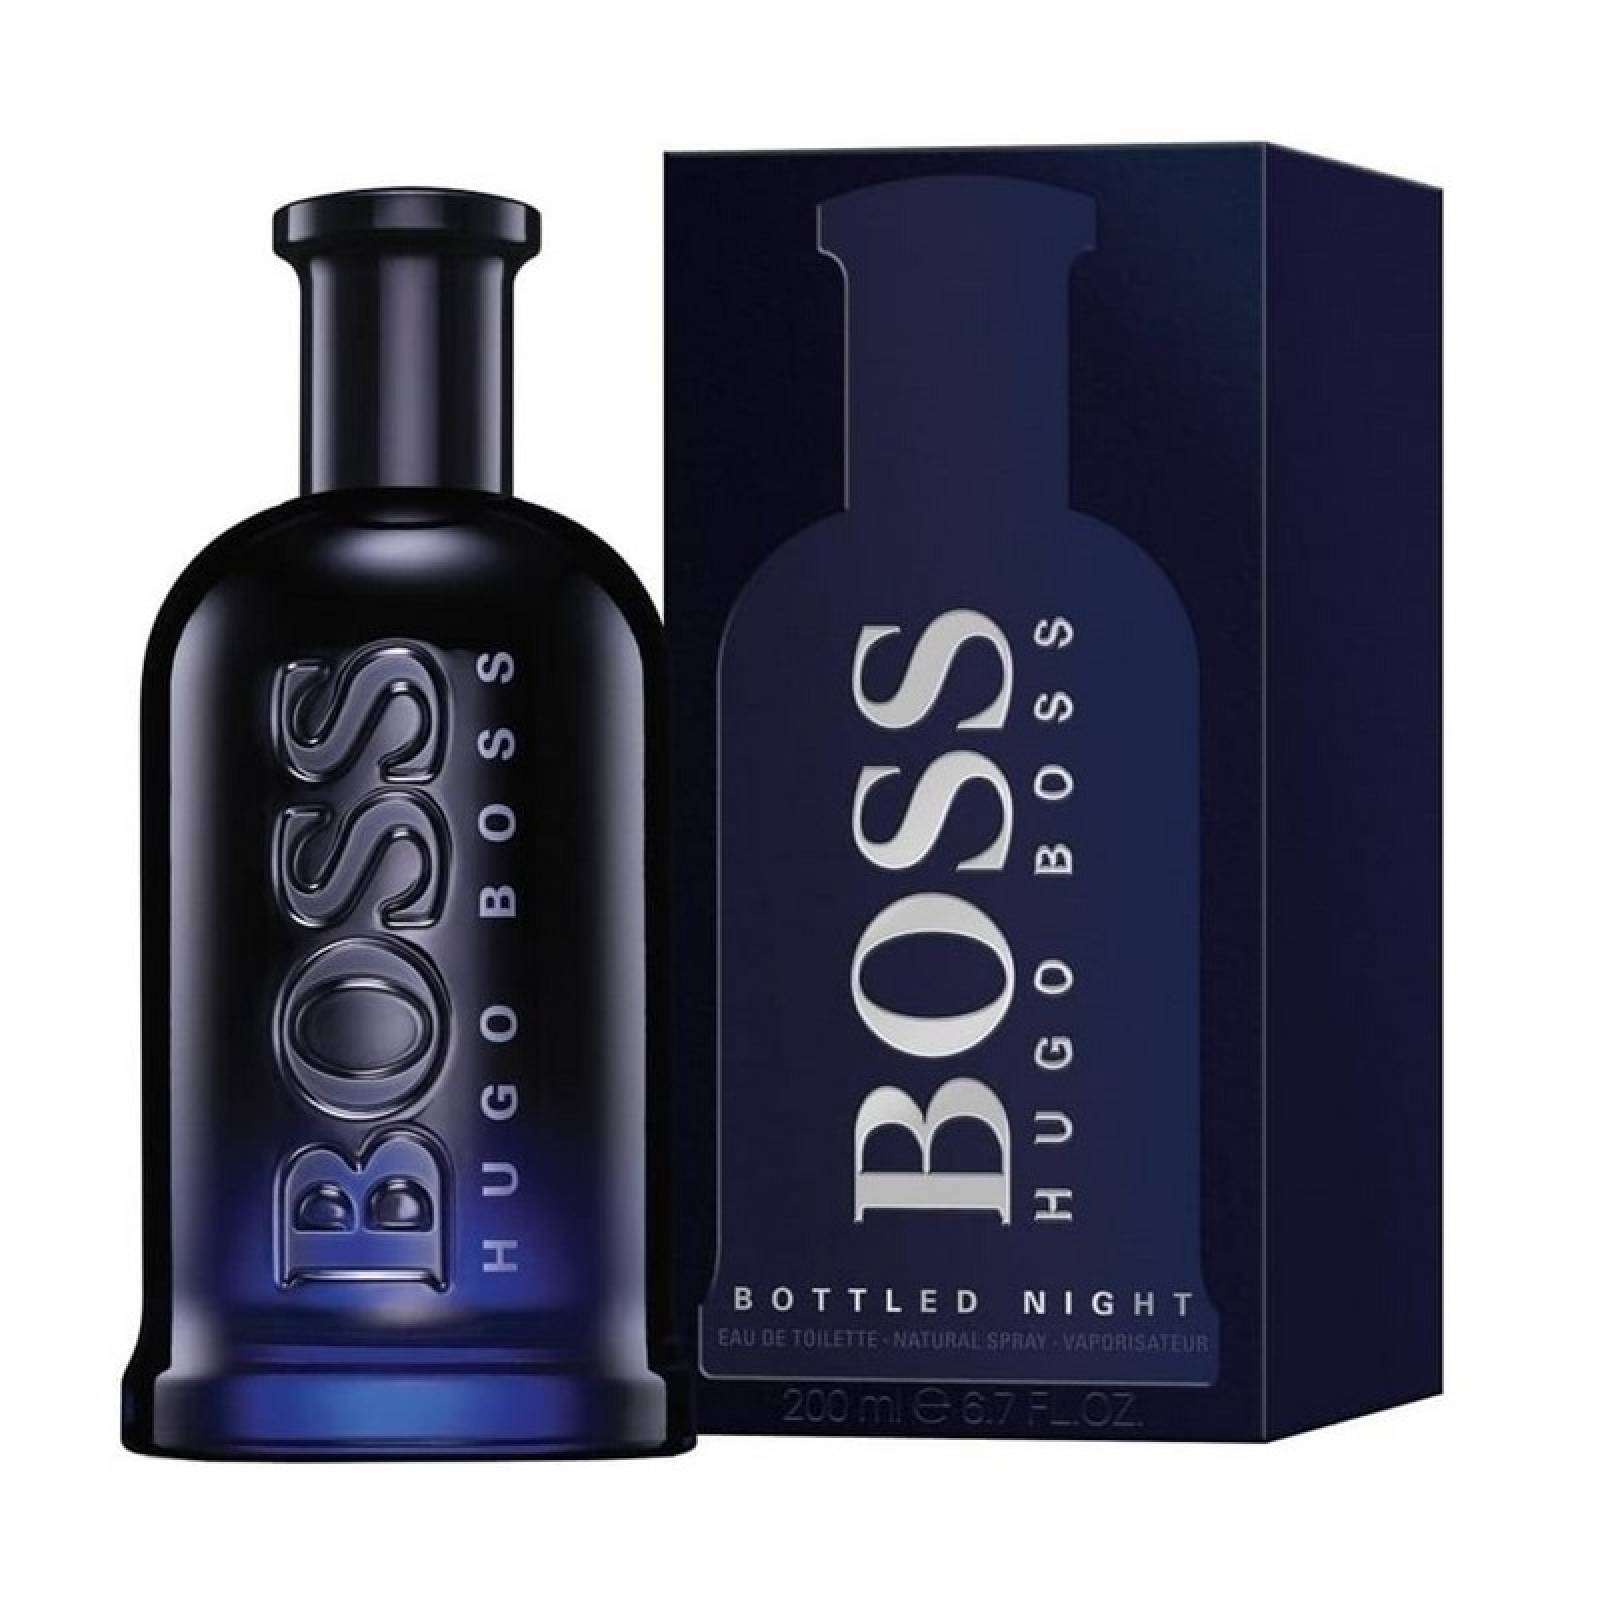 Boss Bottled Nigth 200 ml Edt Spray de Hugo Boss para Caballero